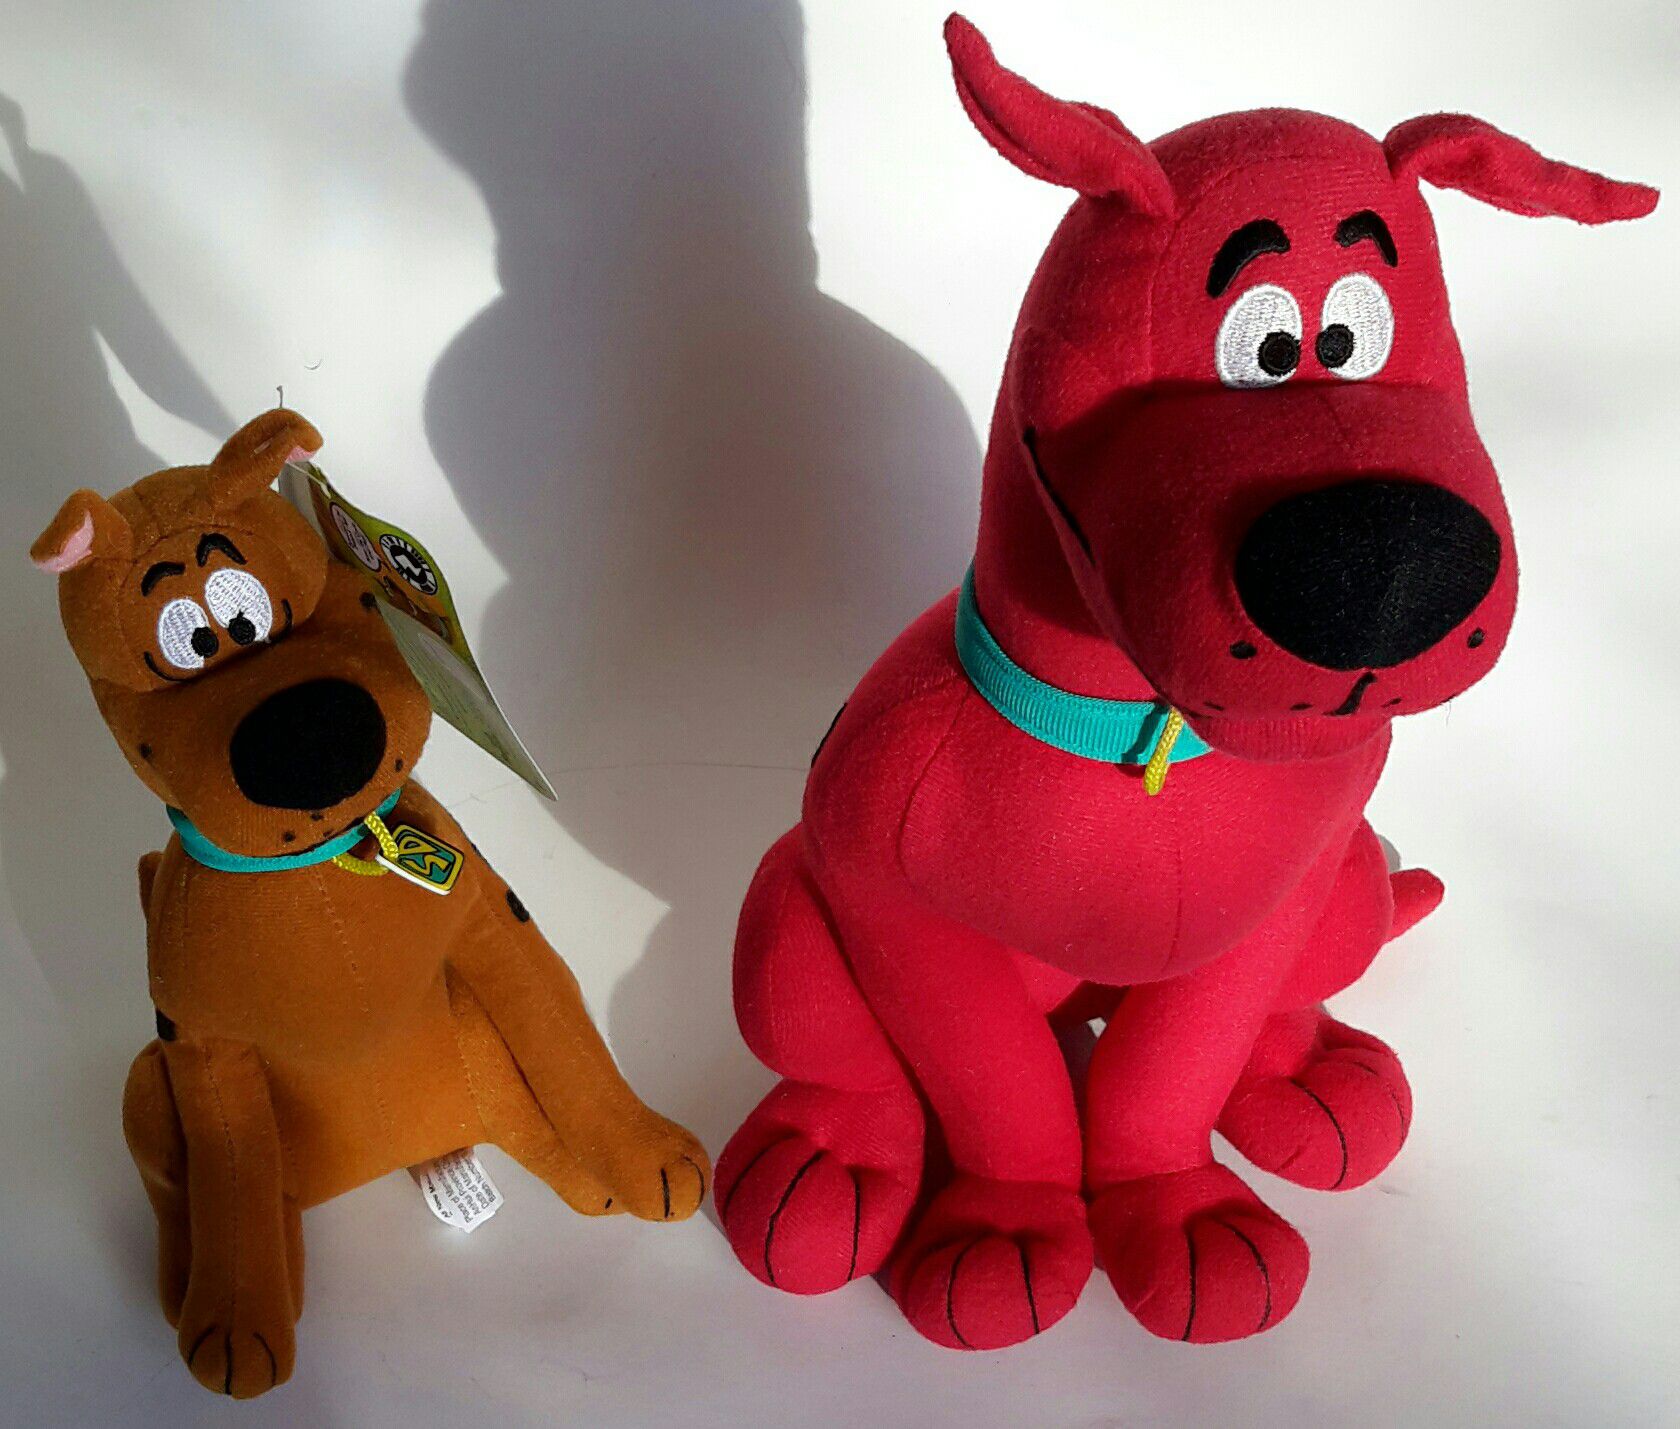 Scooby Doo dolls